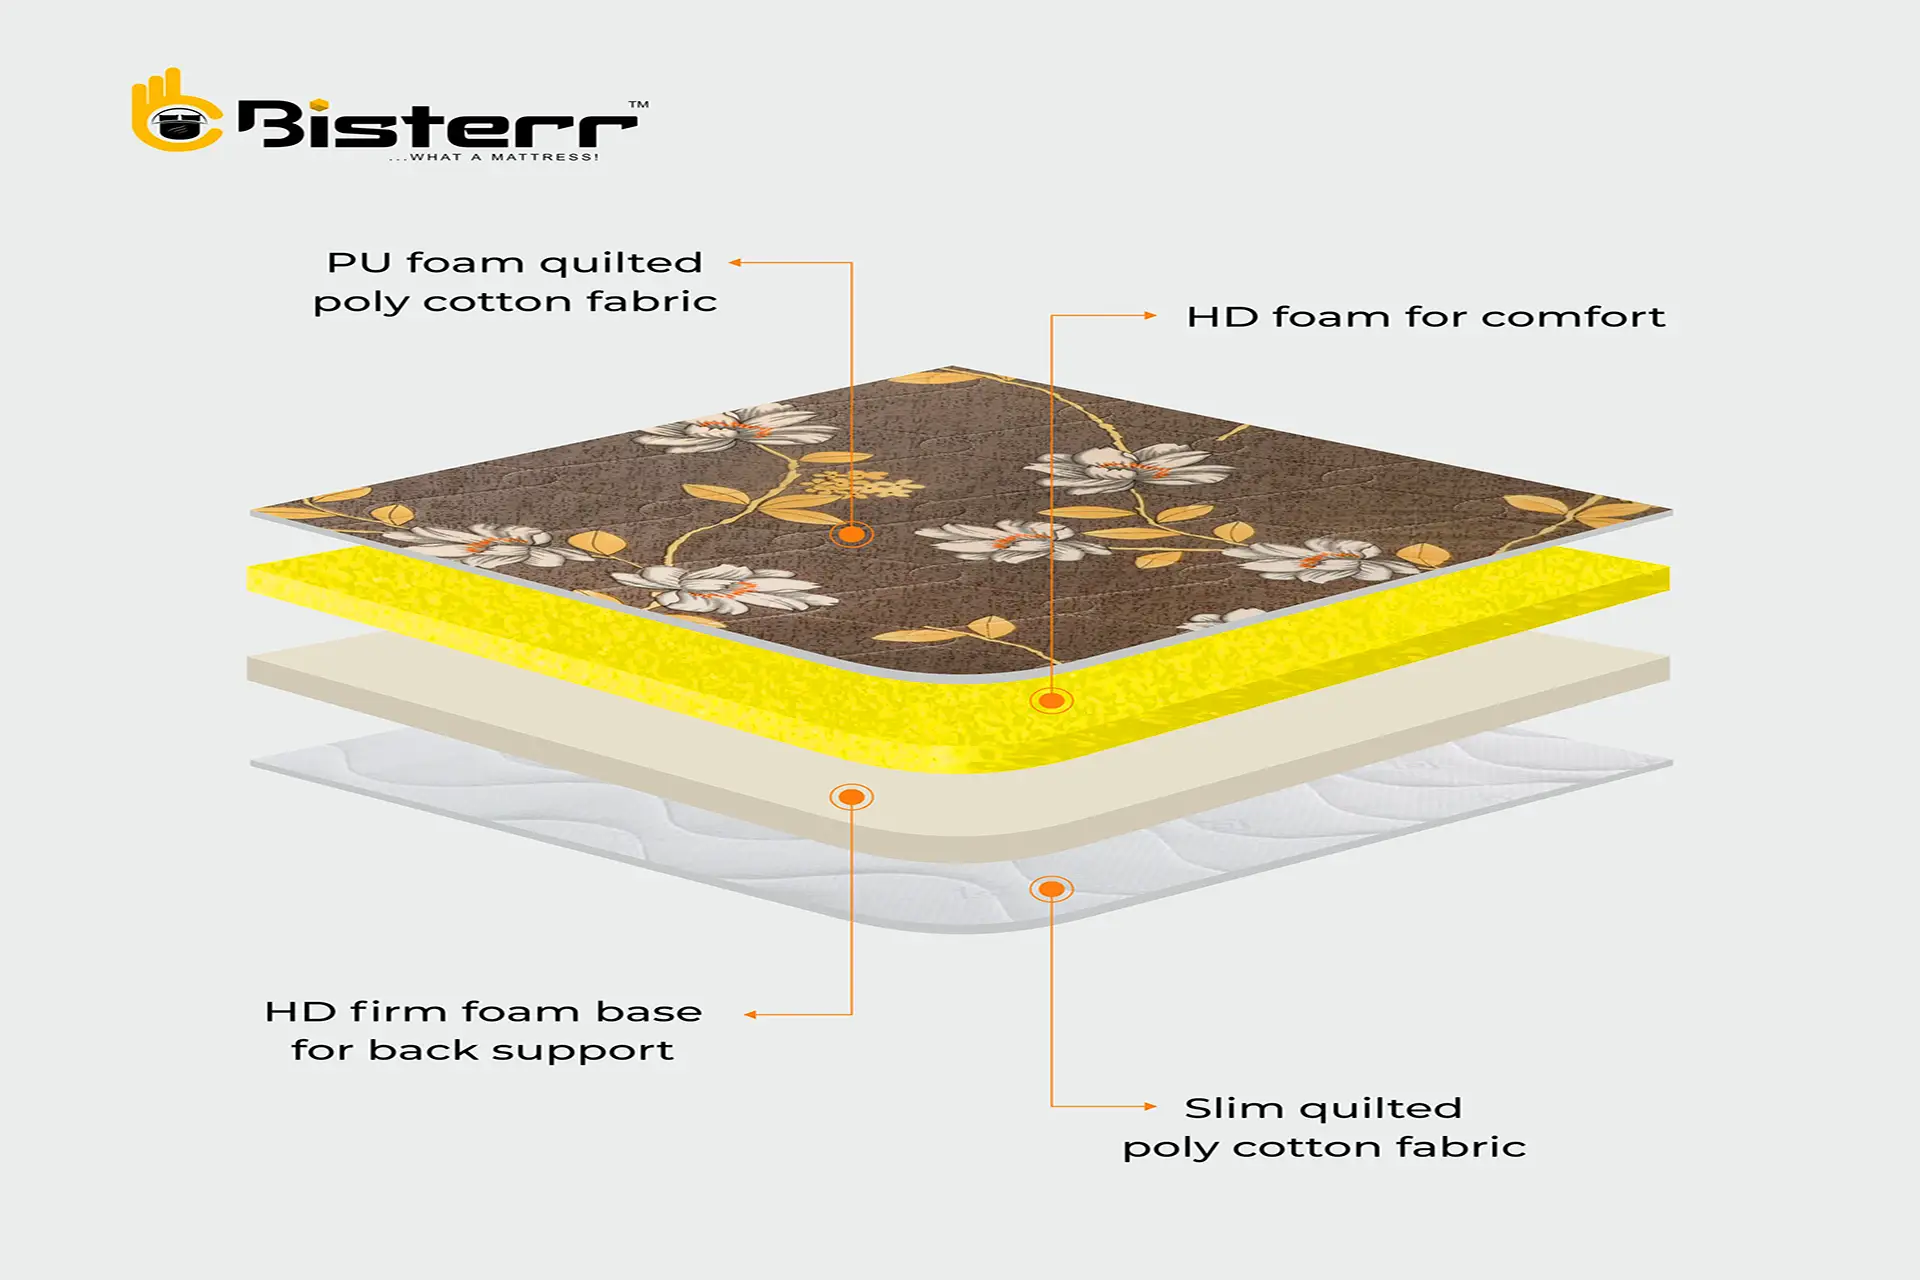 Aasra Plus Foldable Mat